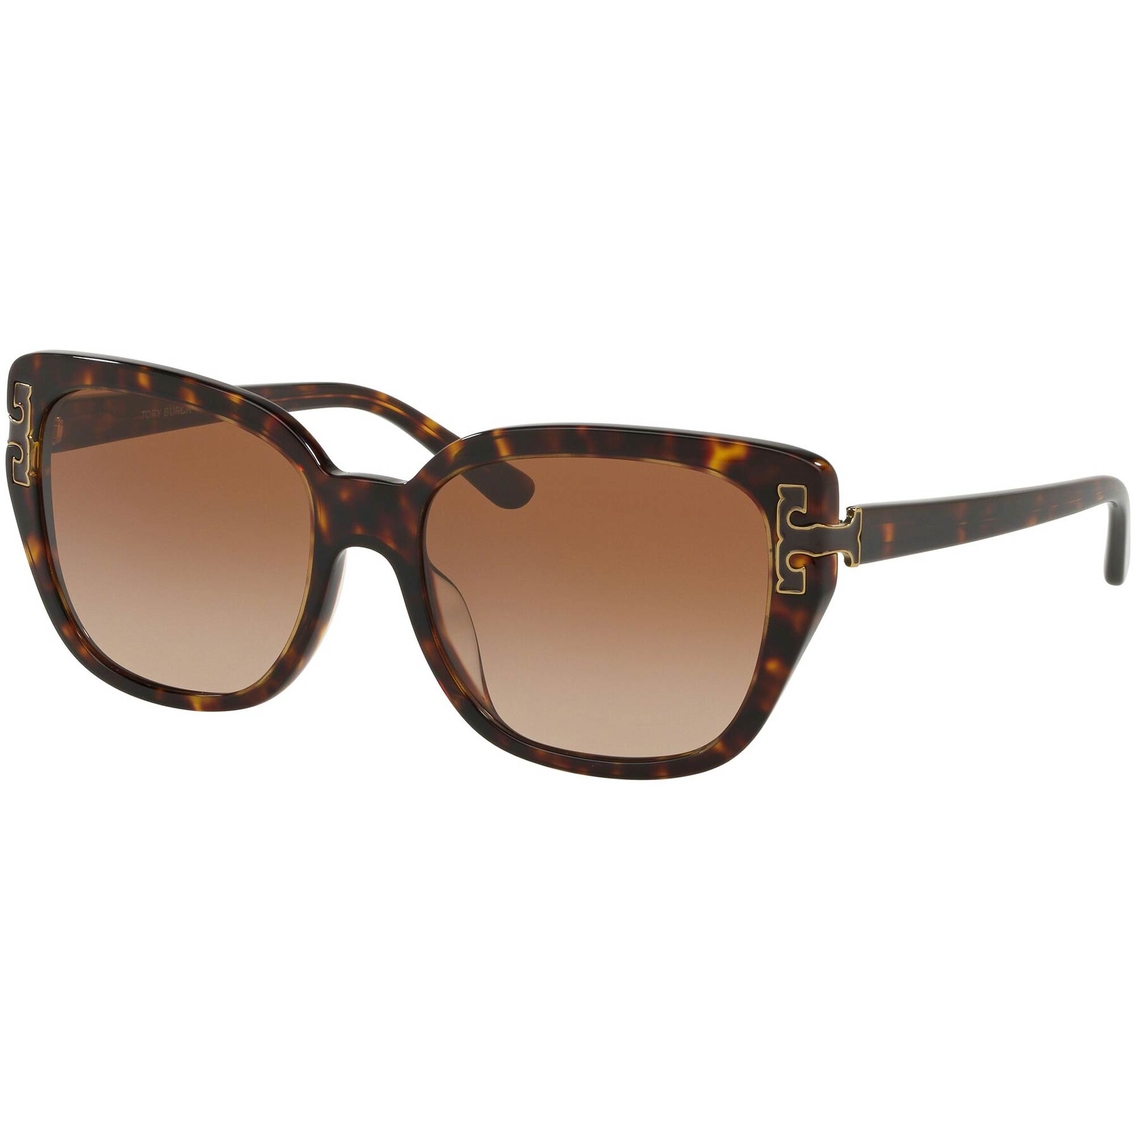 Tory Burch Cat Eye Sunglasses 0ty7134u172813 | Women's Sunglasses |  Clothing & Accessories | Shop The Exchange